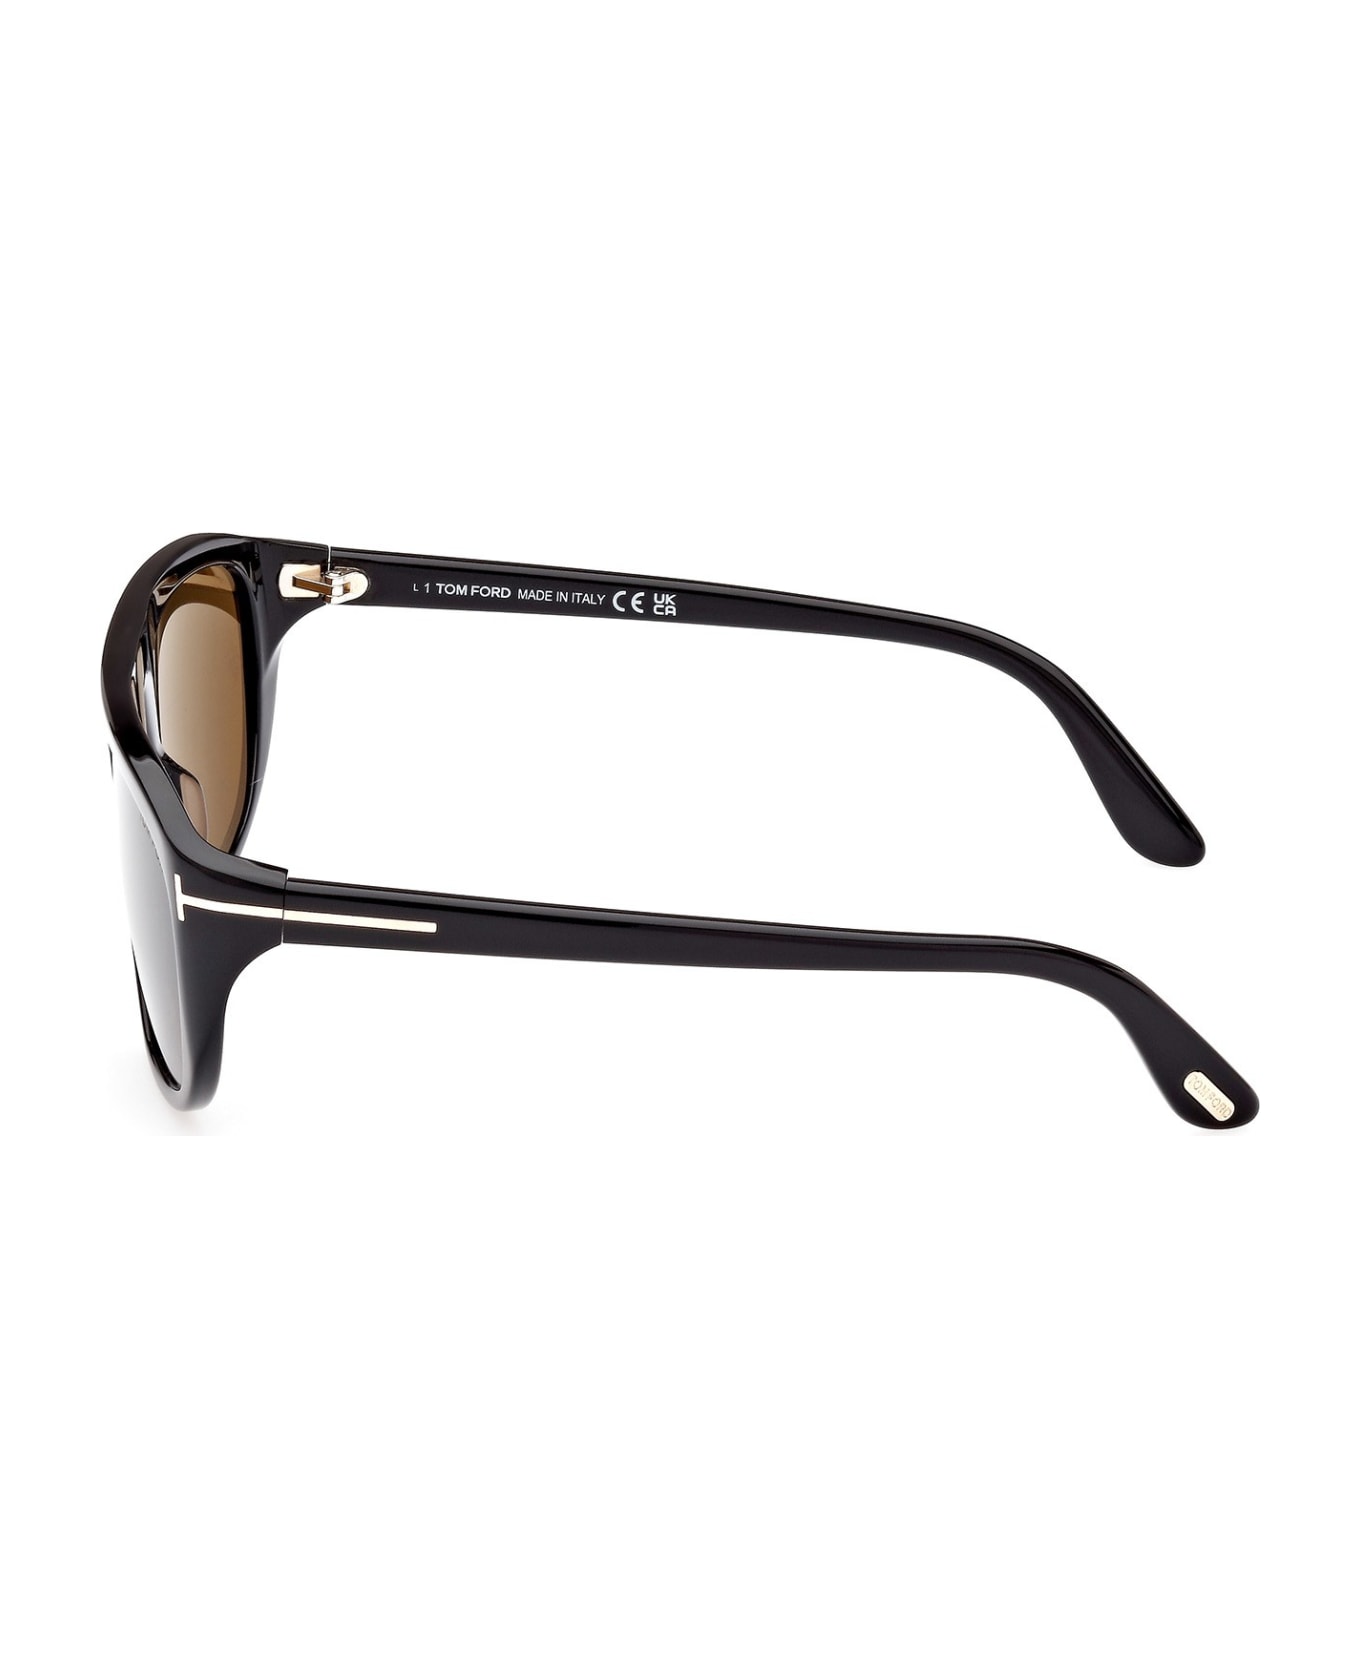 Tom Ford Eyewear Sunglasses Leight - Nero/Marrone